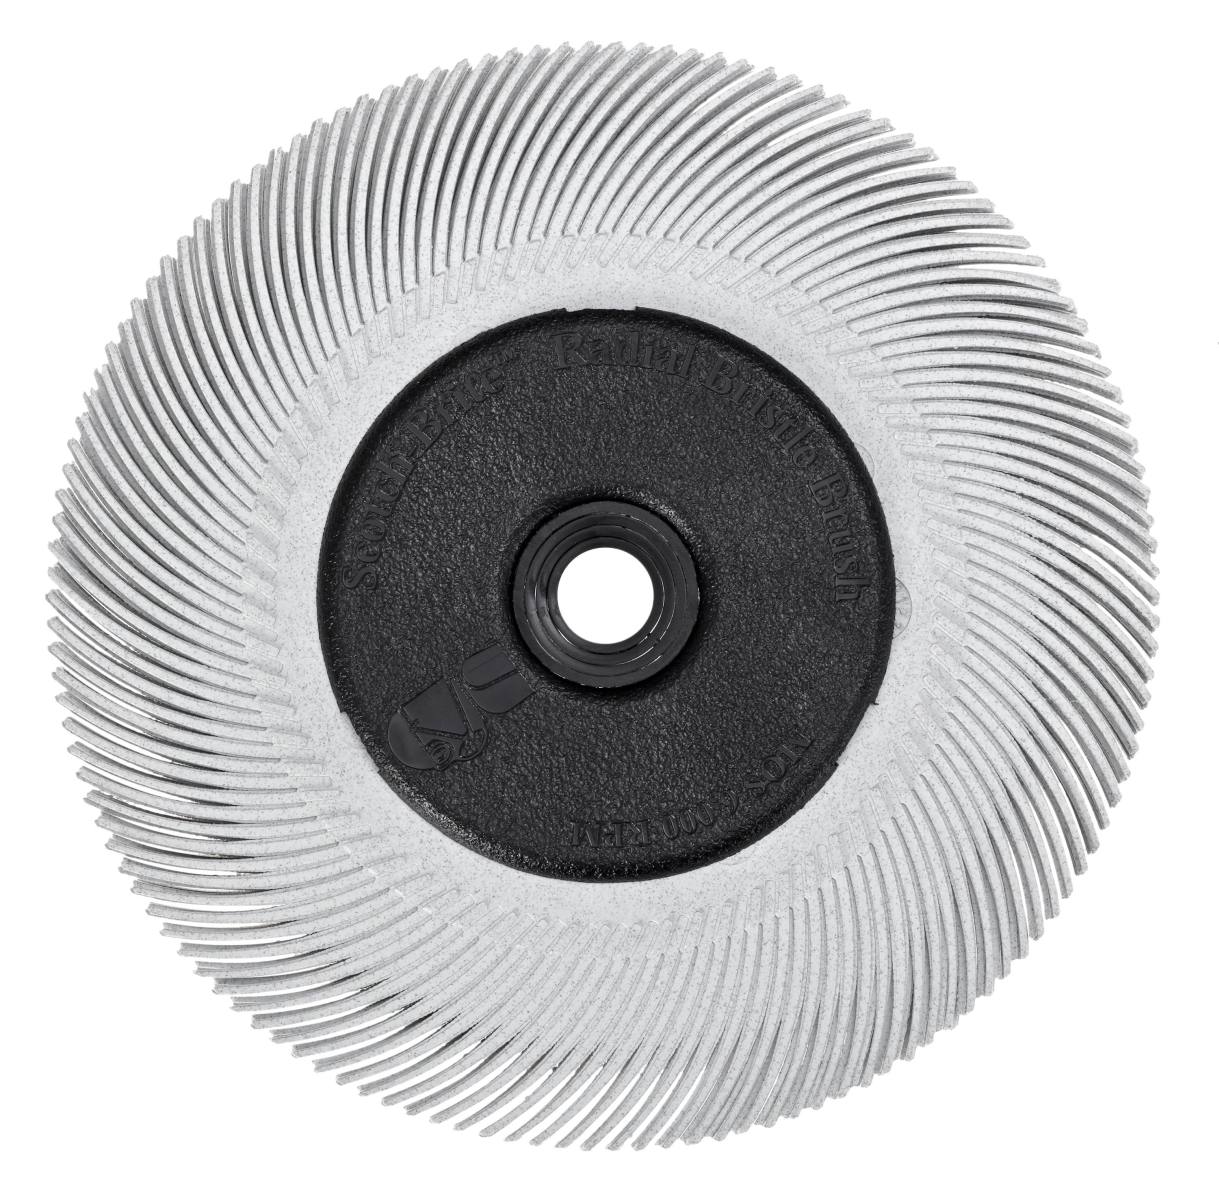 3M Scotch-Brite Radial Bristle Disc BB-ZB with flange, white, 152.4 mm, P120, type C #33212